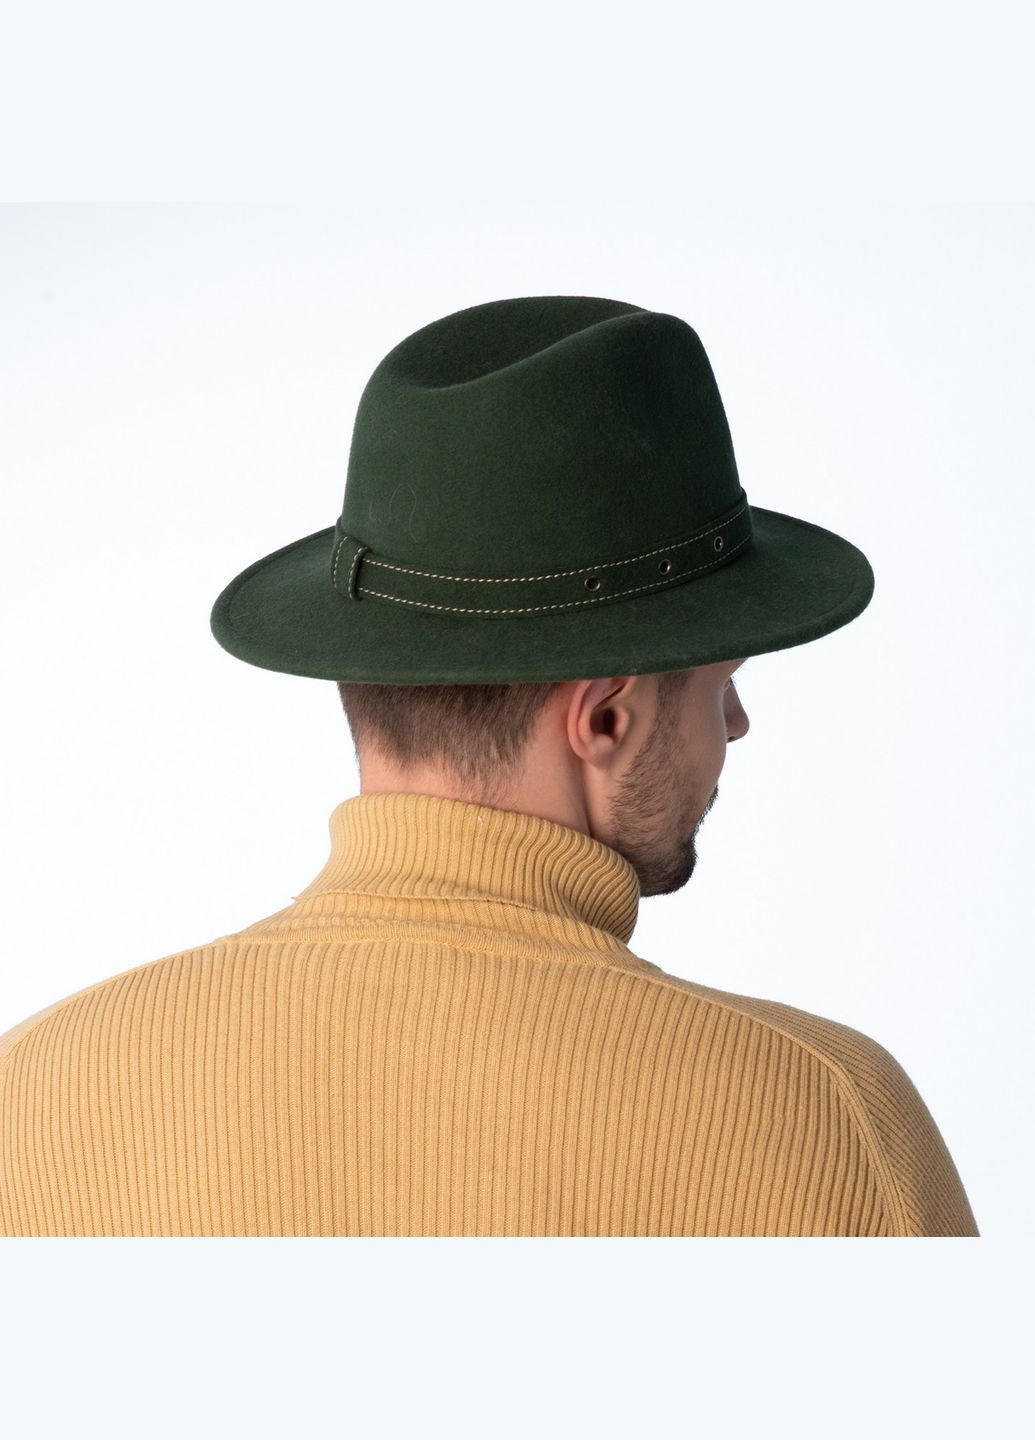 Шляпа федора мужская с ремешком фетр зеленая 653-307 LuckyLOOK 653-307m (280914751)